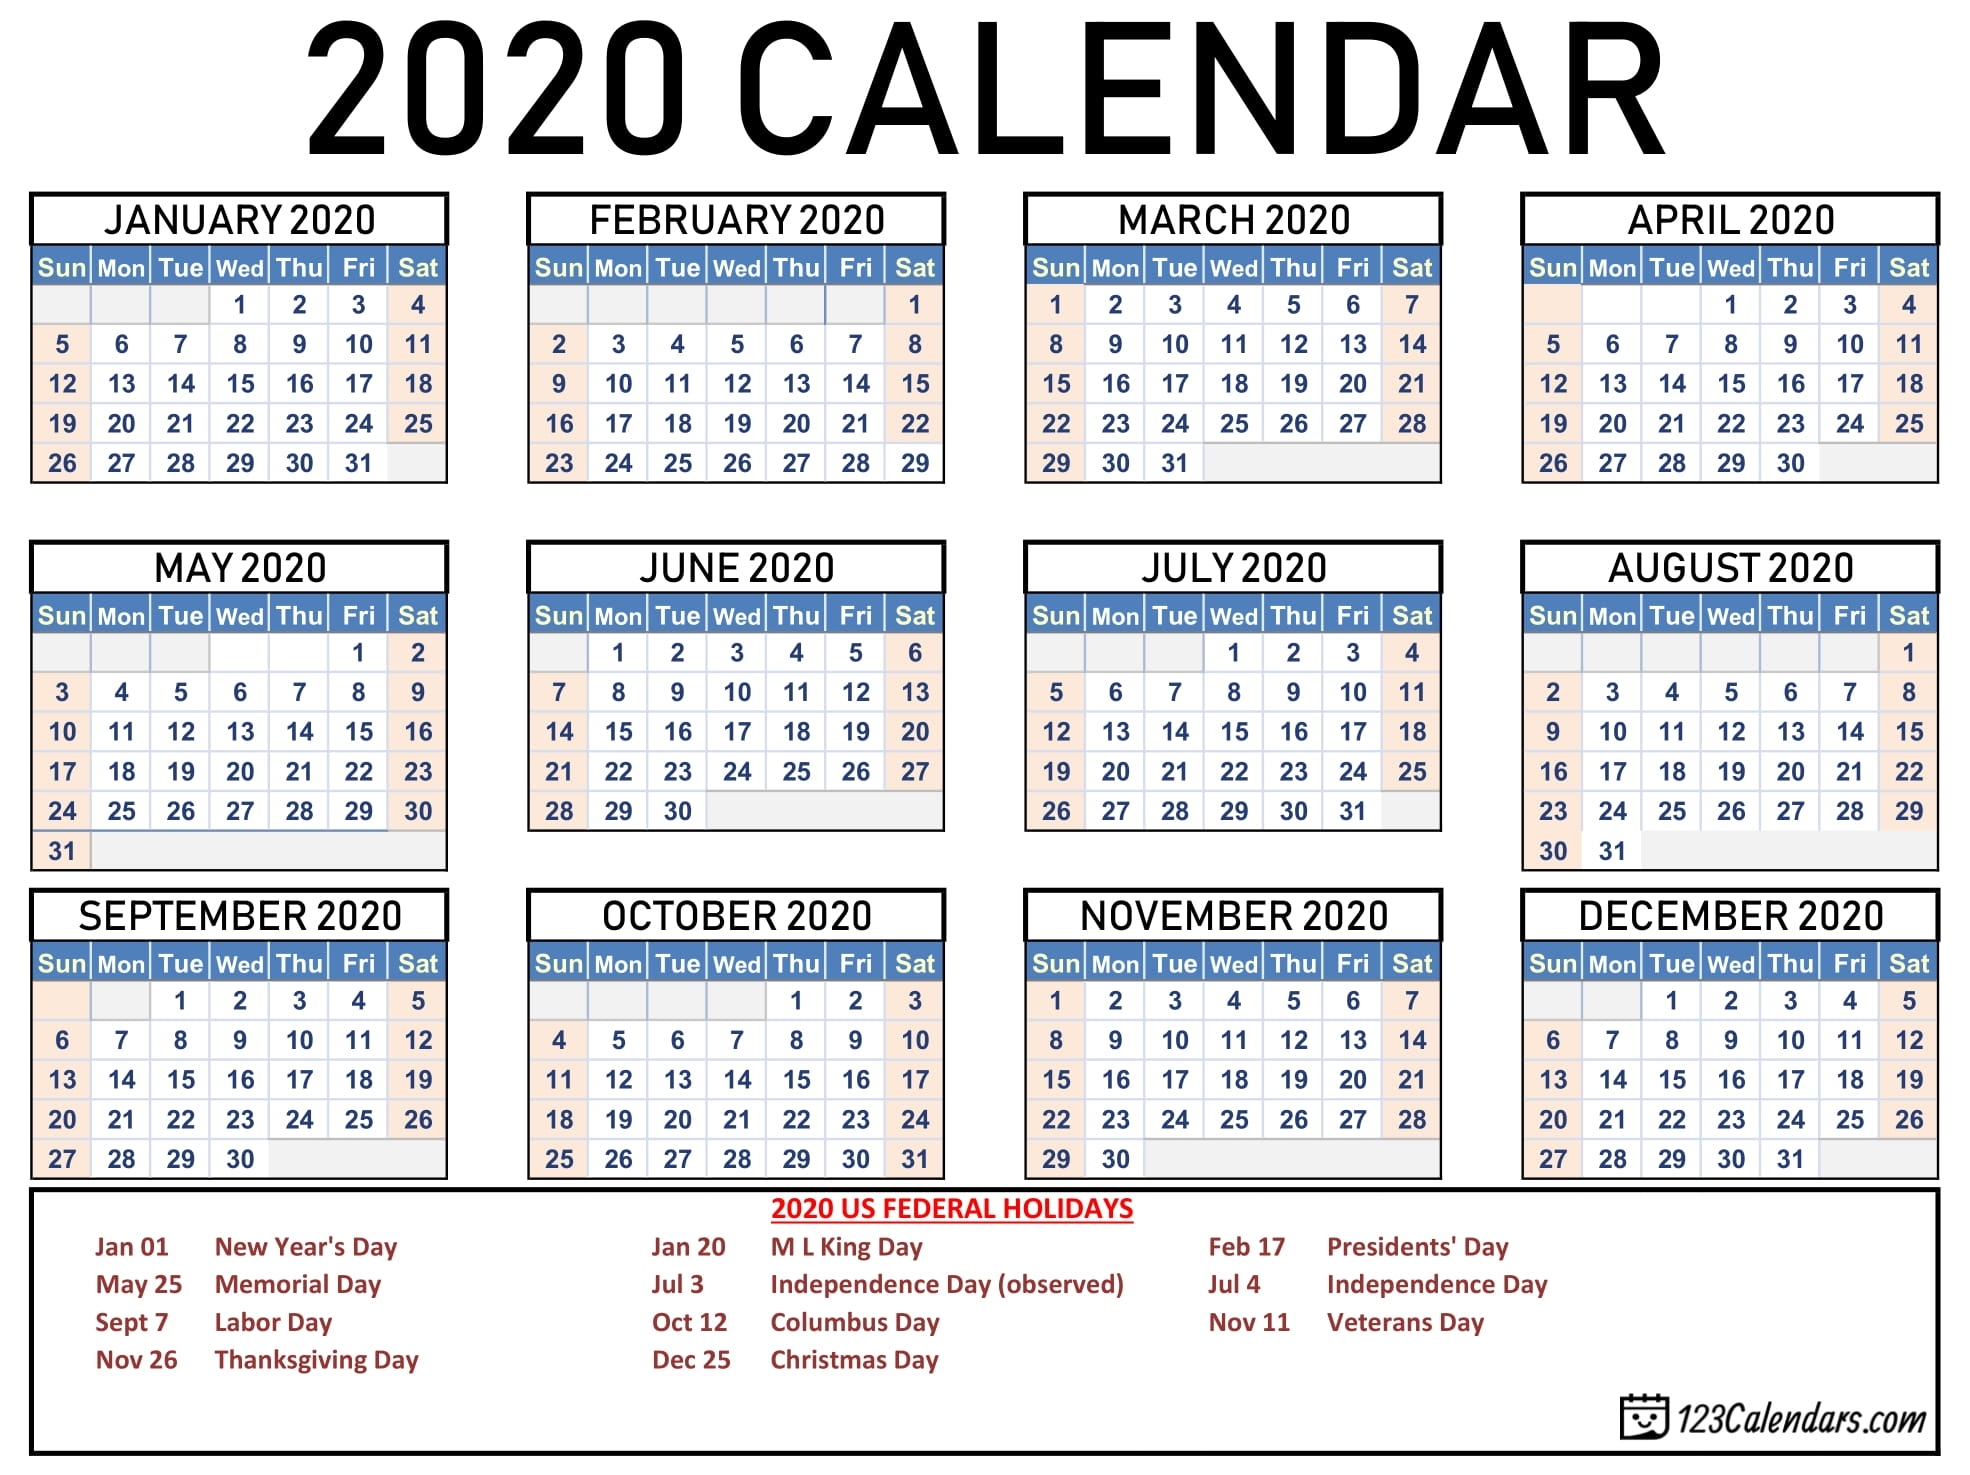 Free Printable 2020 Calendar | 123Calendars Remarkable Printable 2020 Calendar Showing Federal Holidays